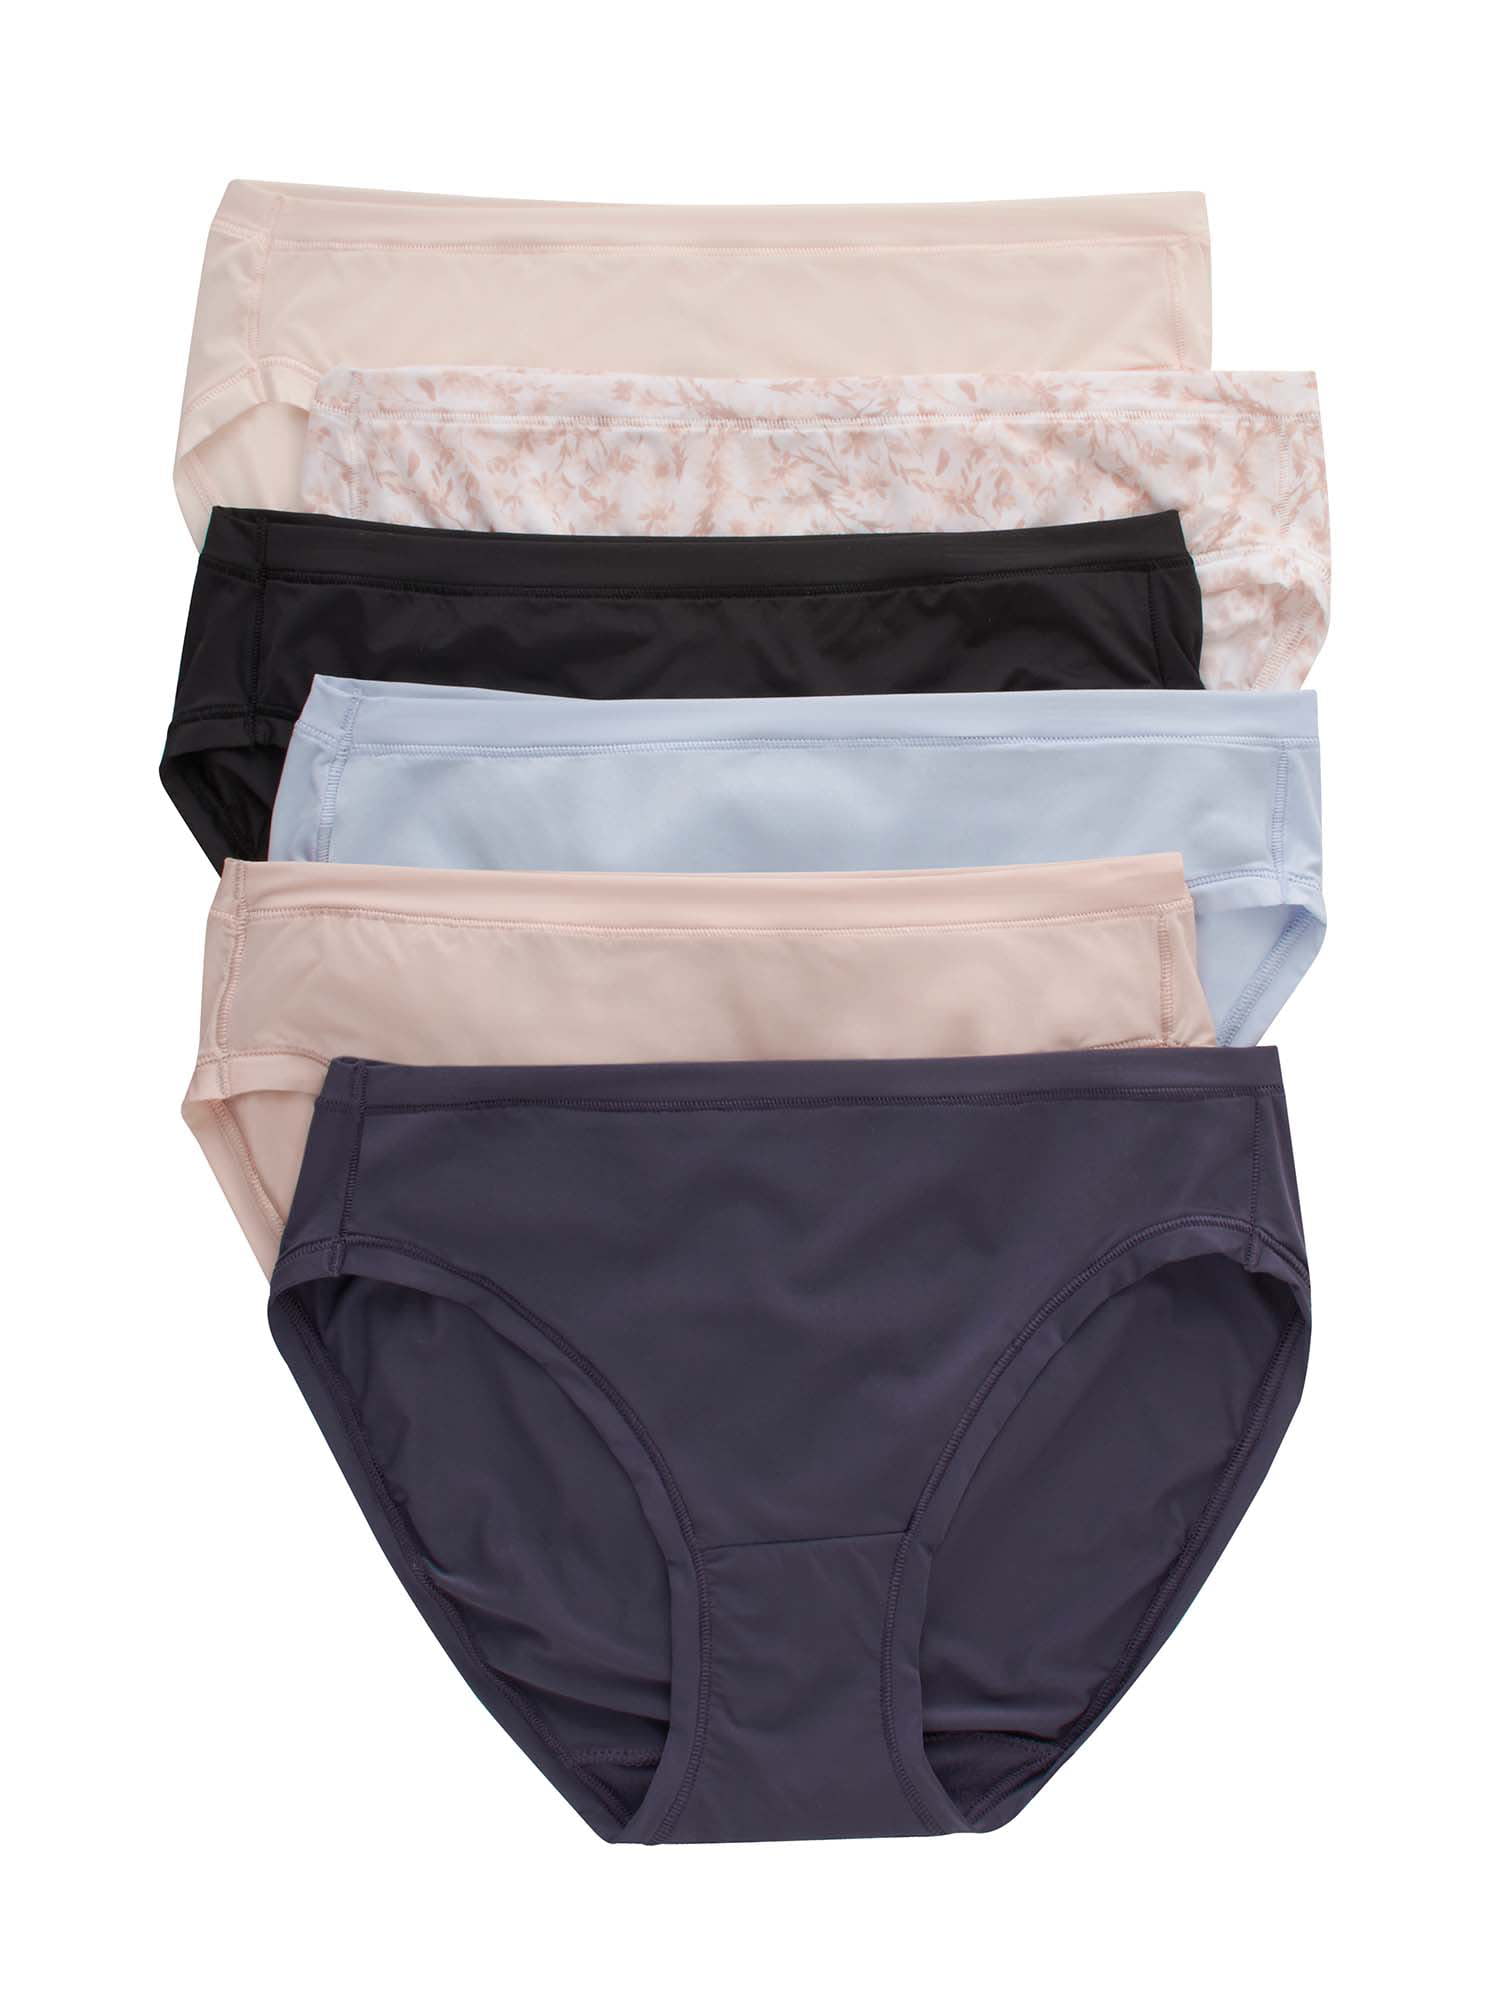 Fruit of the Loom Women's Beyondsoft Low-Rise Brief Underwear, 6